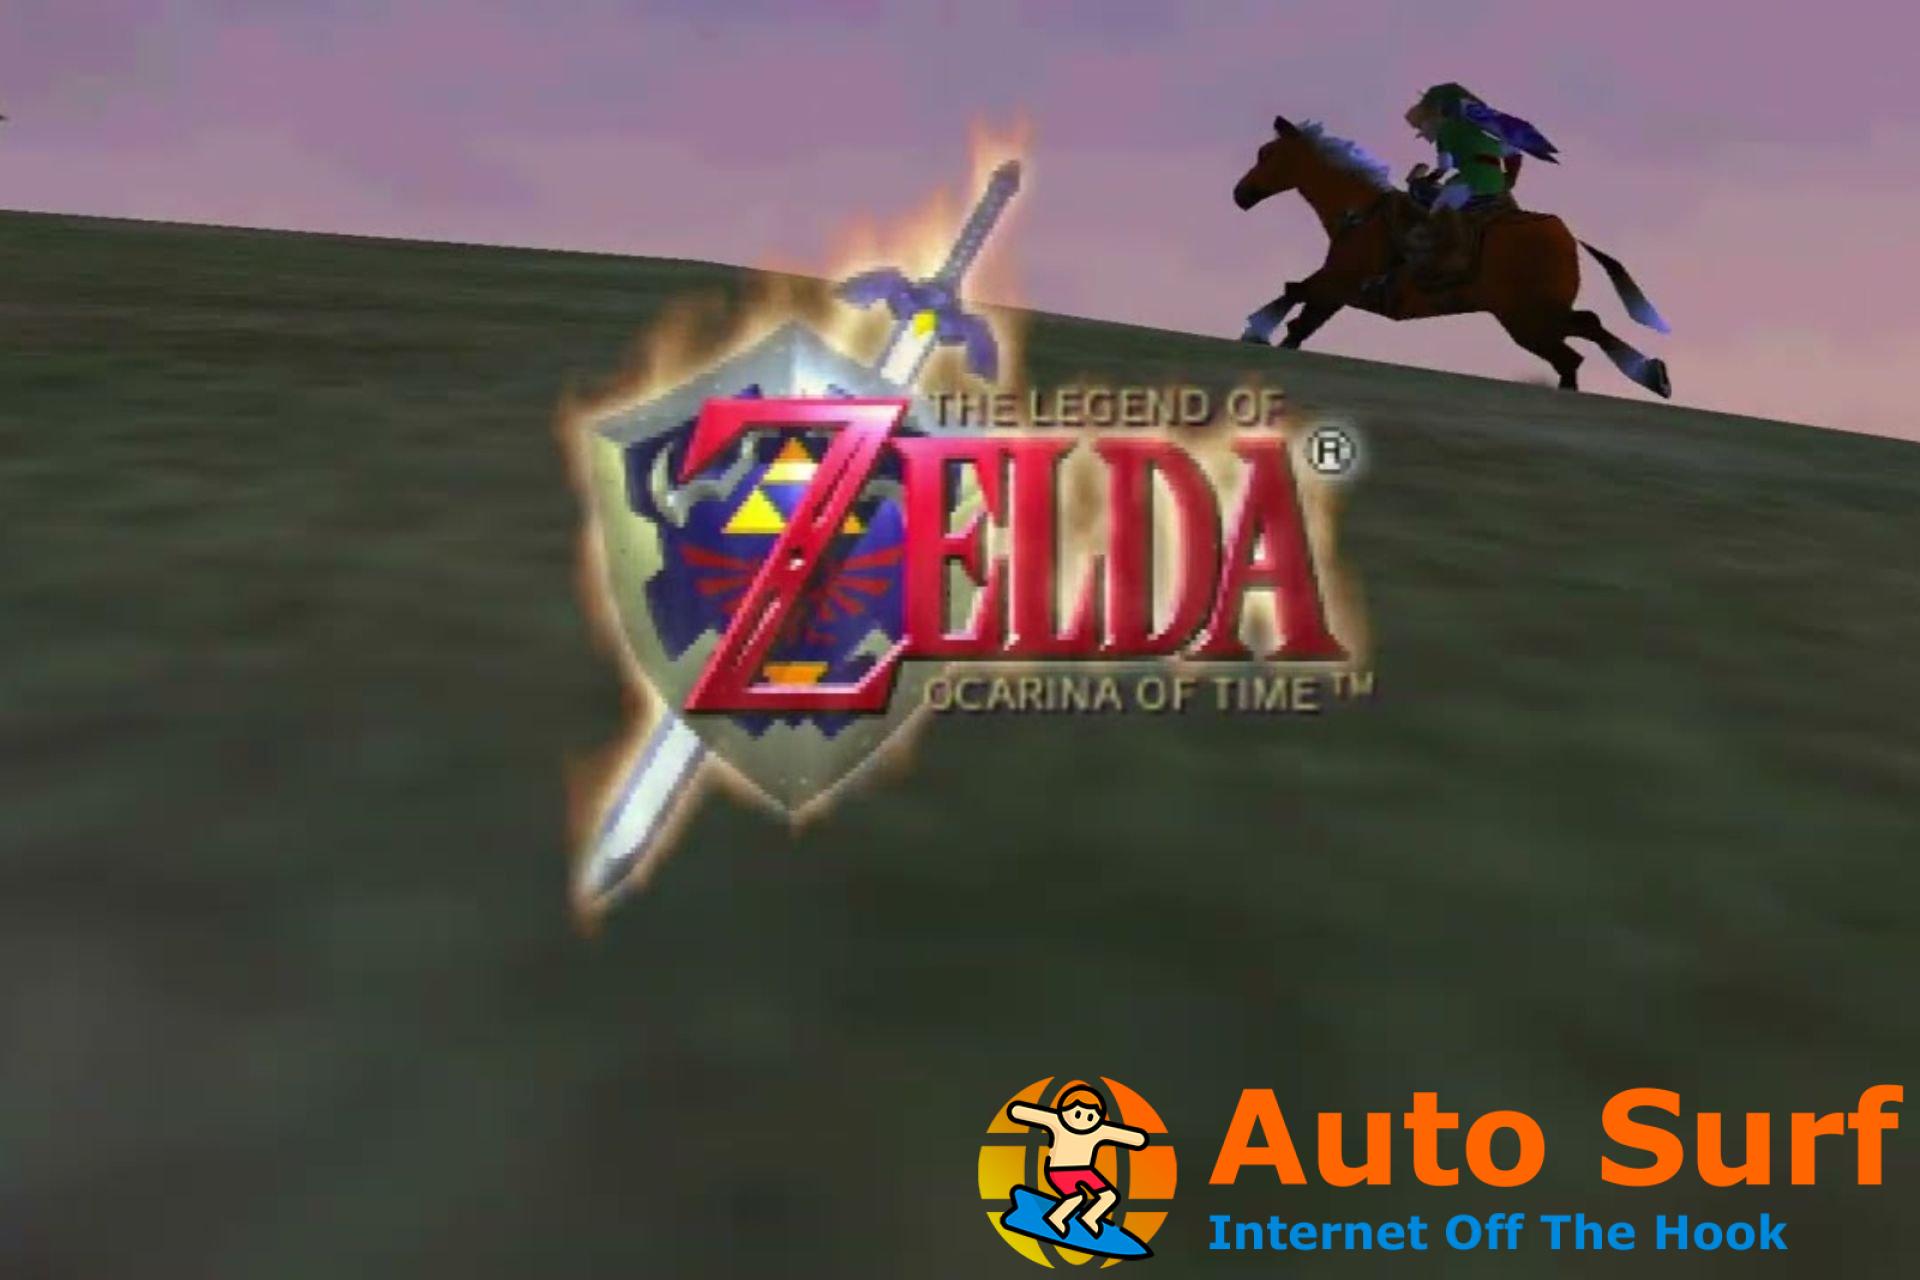 Cómo jugar a Zelda: Ocarina of Time en tu PC